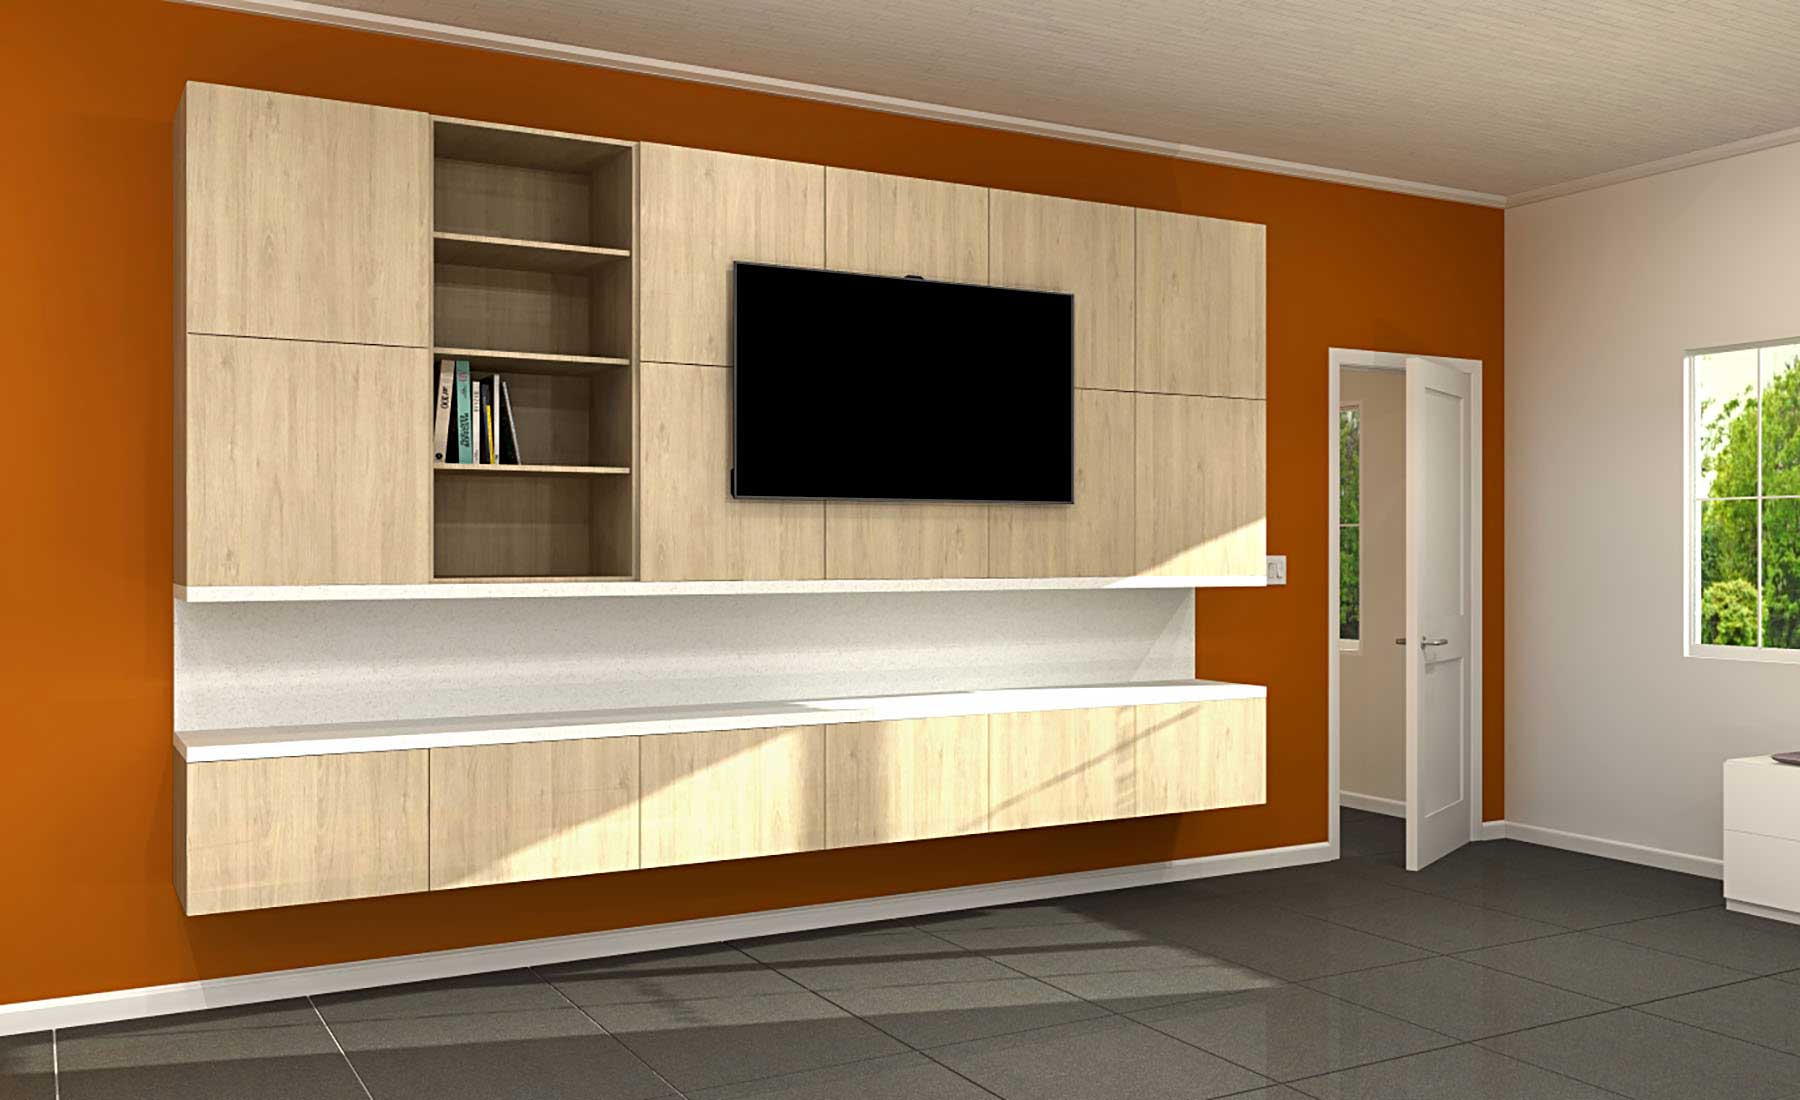 A small bedroom with big organization ideas - IKEA